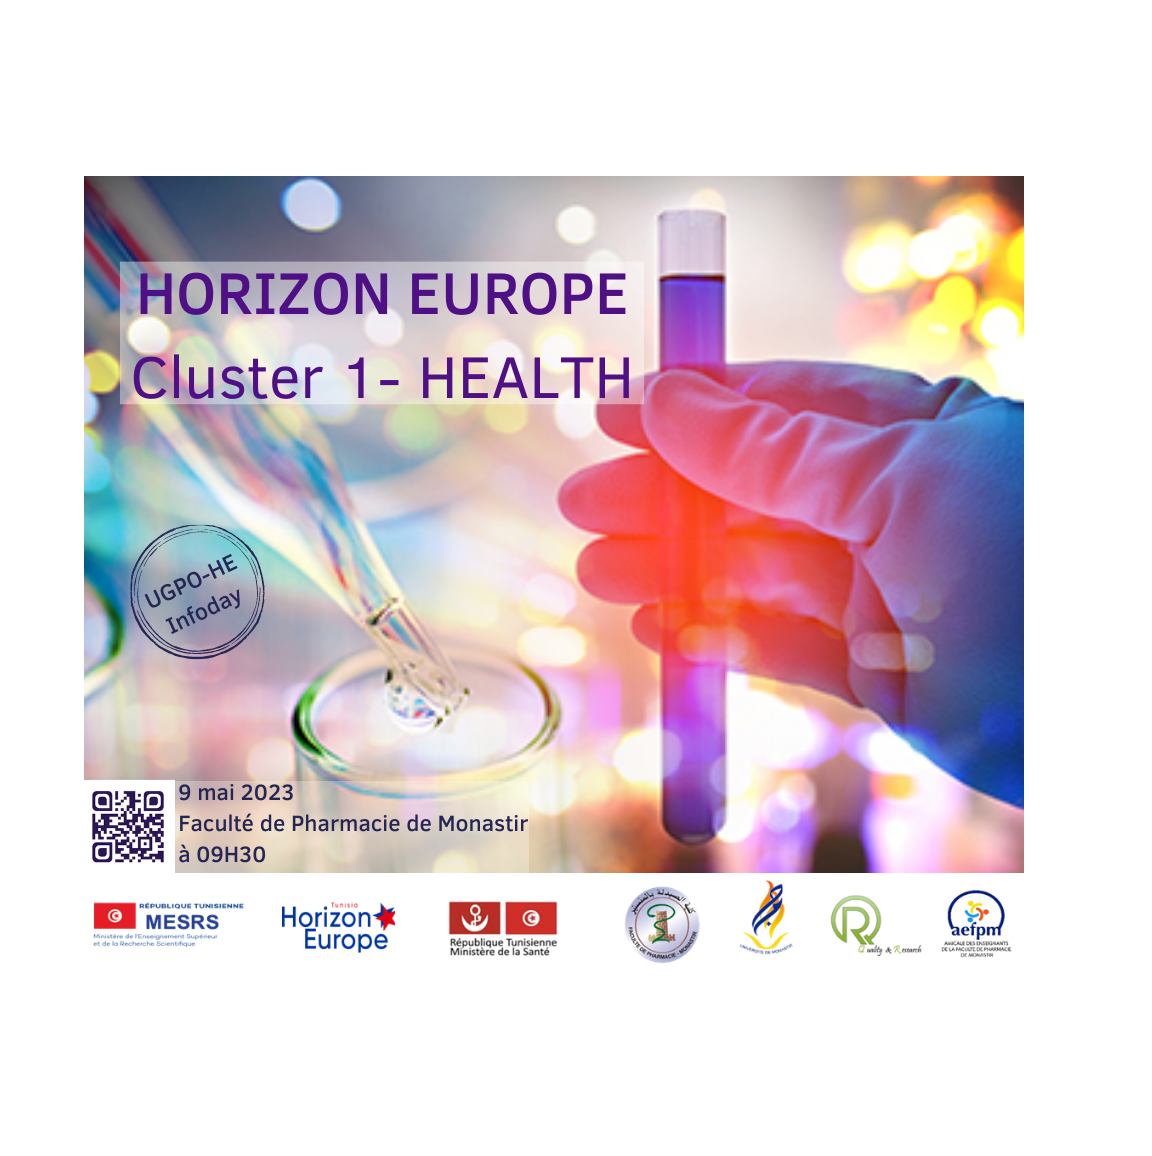 (Horizon Europe, cluster 1-HEALTH).